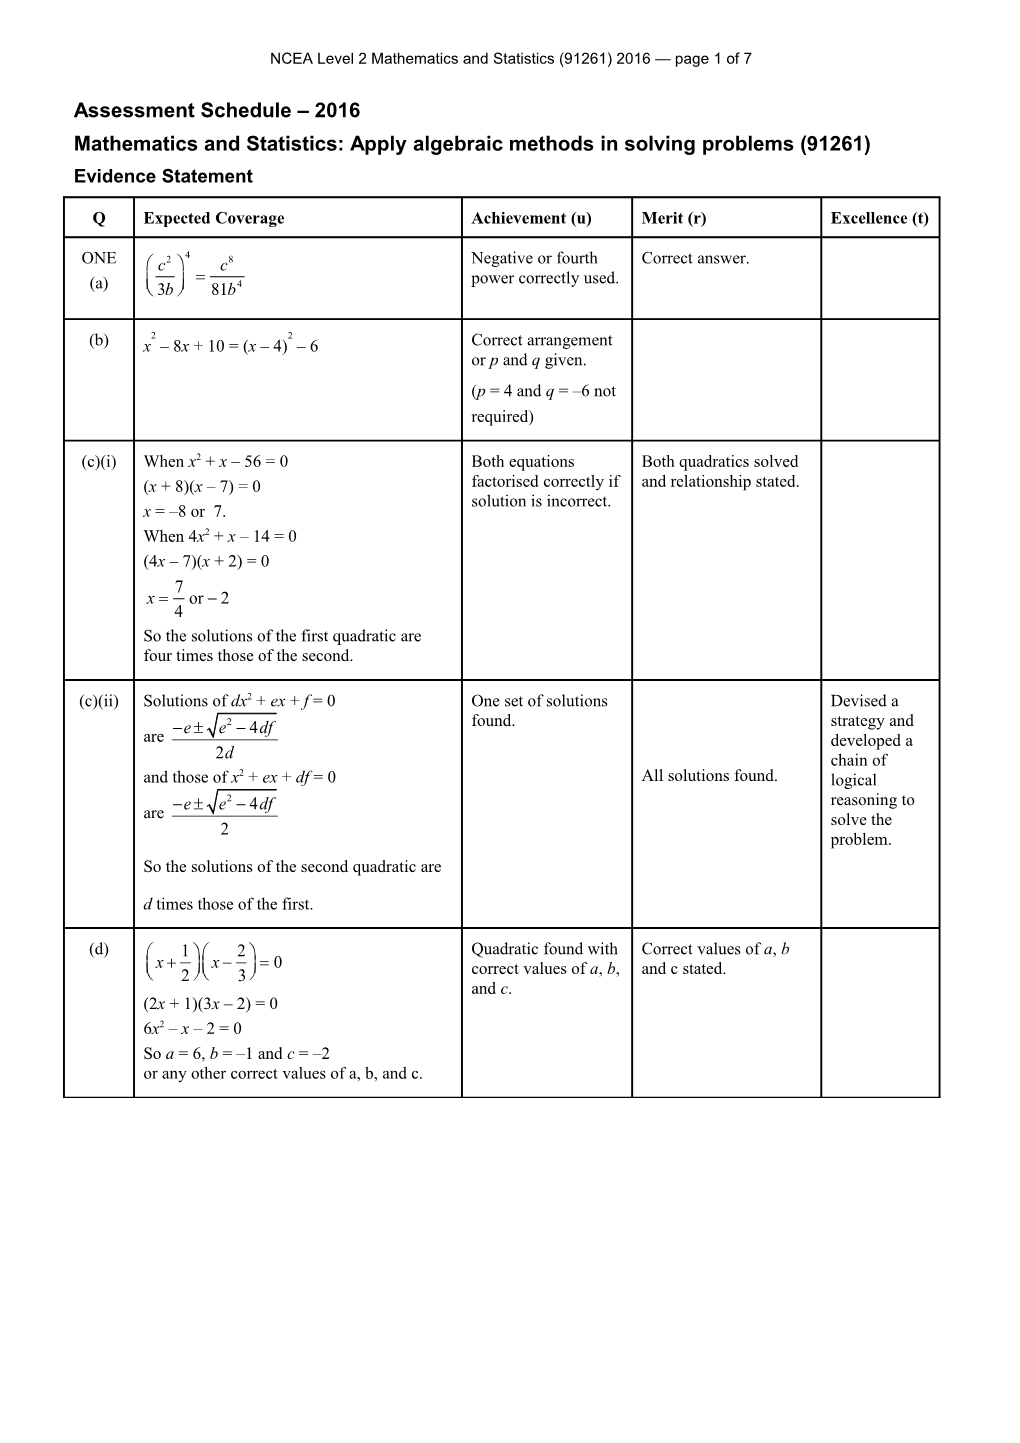 NCEA Level 2 Mathematics and Statistics (91261) 2016 Assessment Schedule